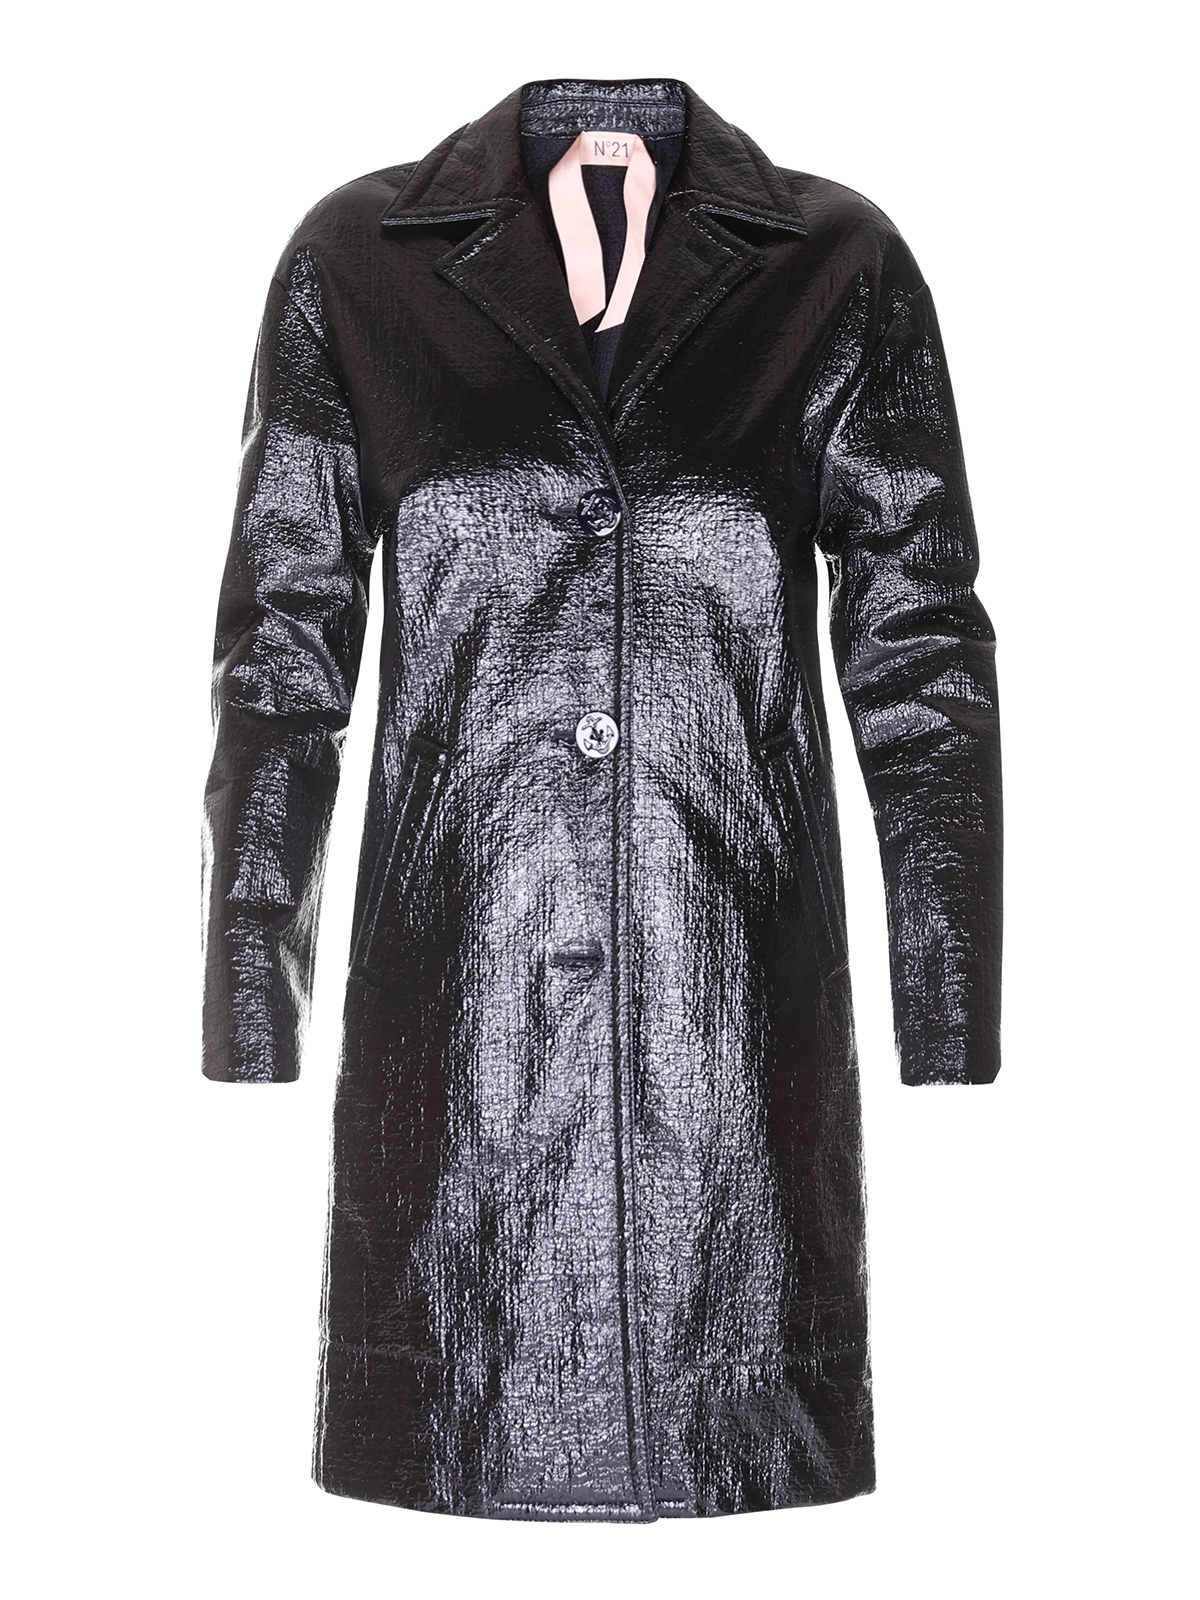 Leather coats N°21 - Faux leather coat - GW040 | Shop online at iKRIX